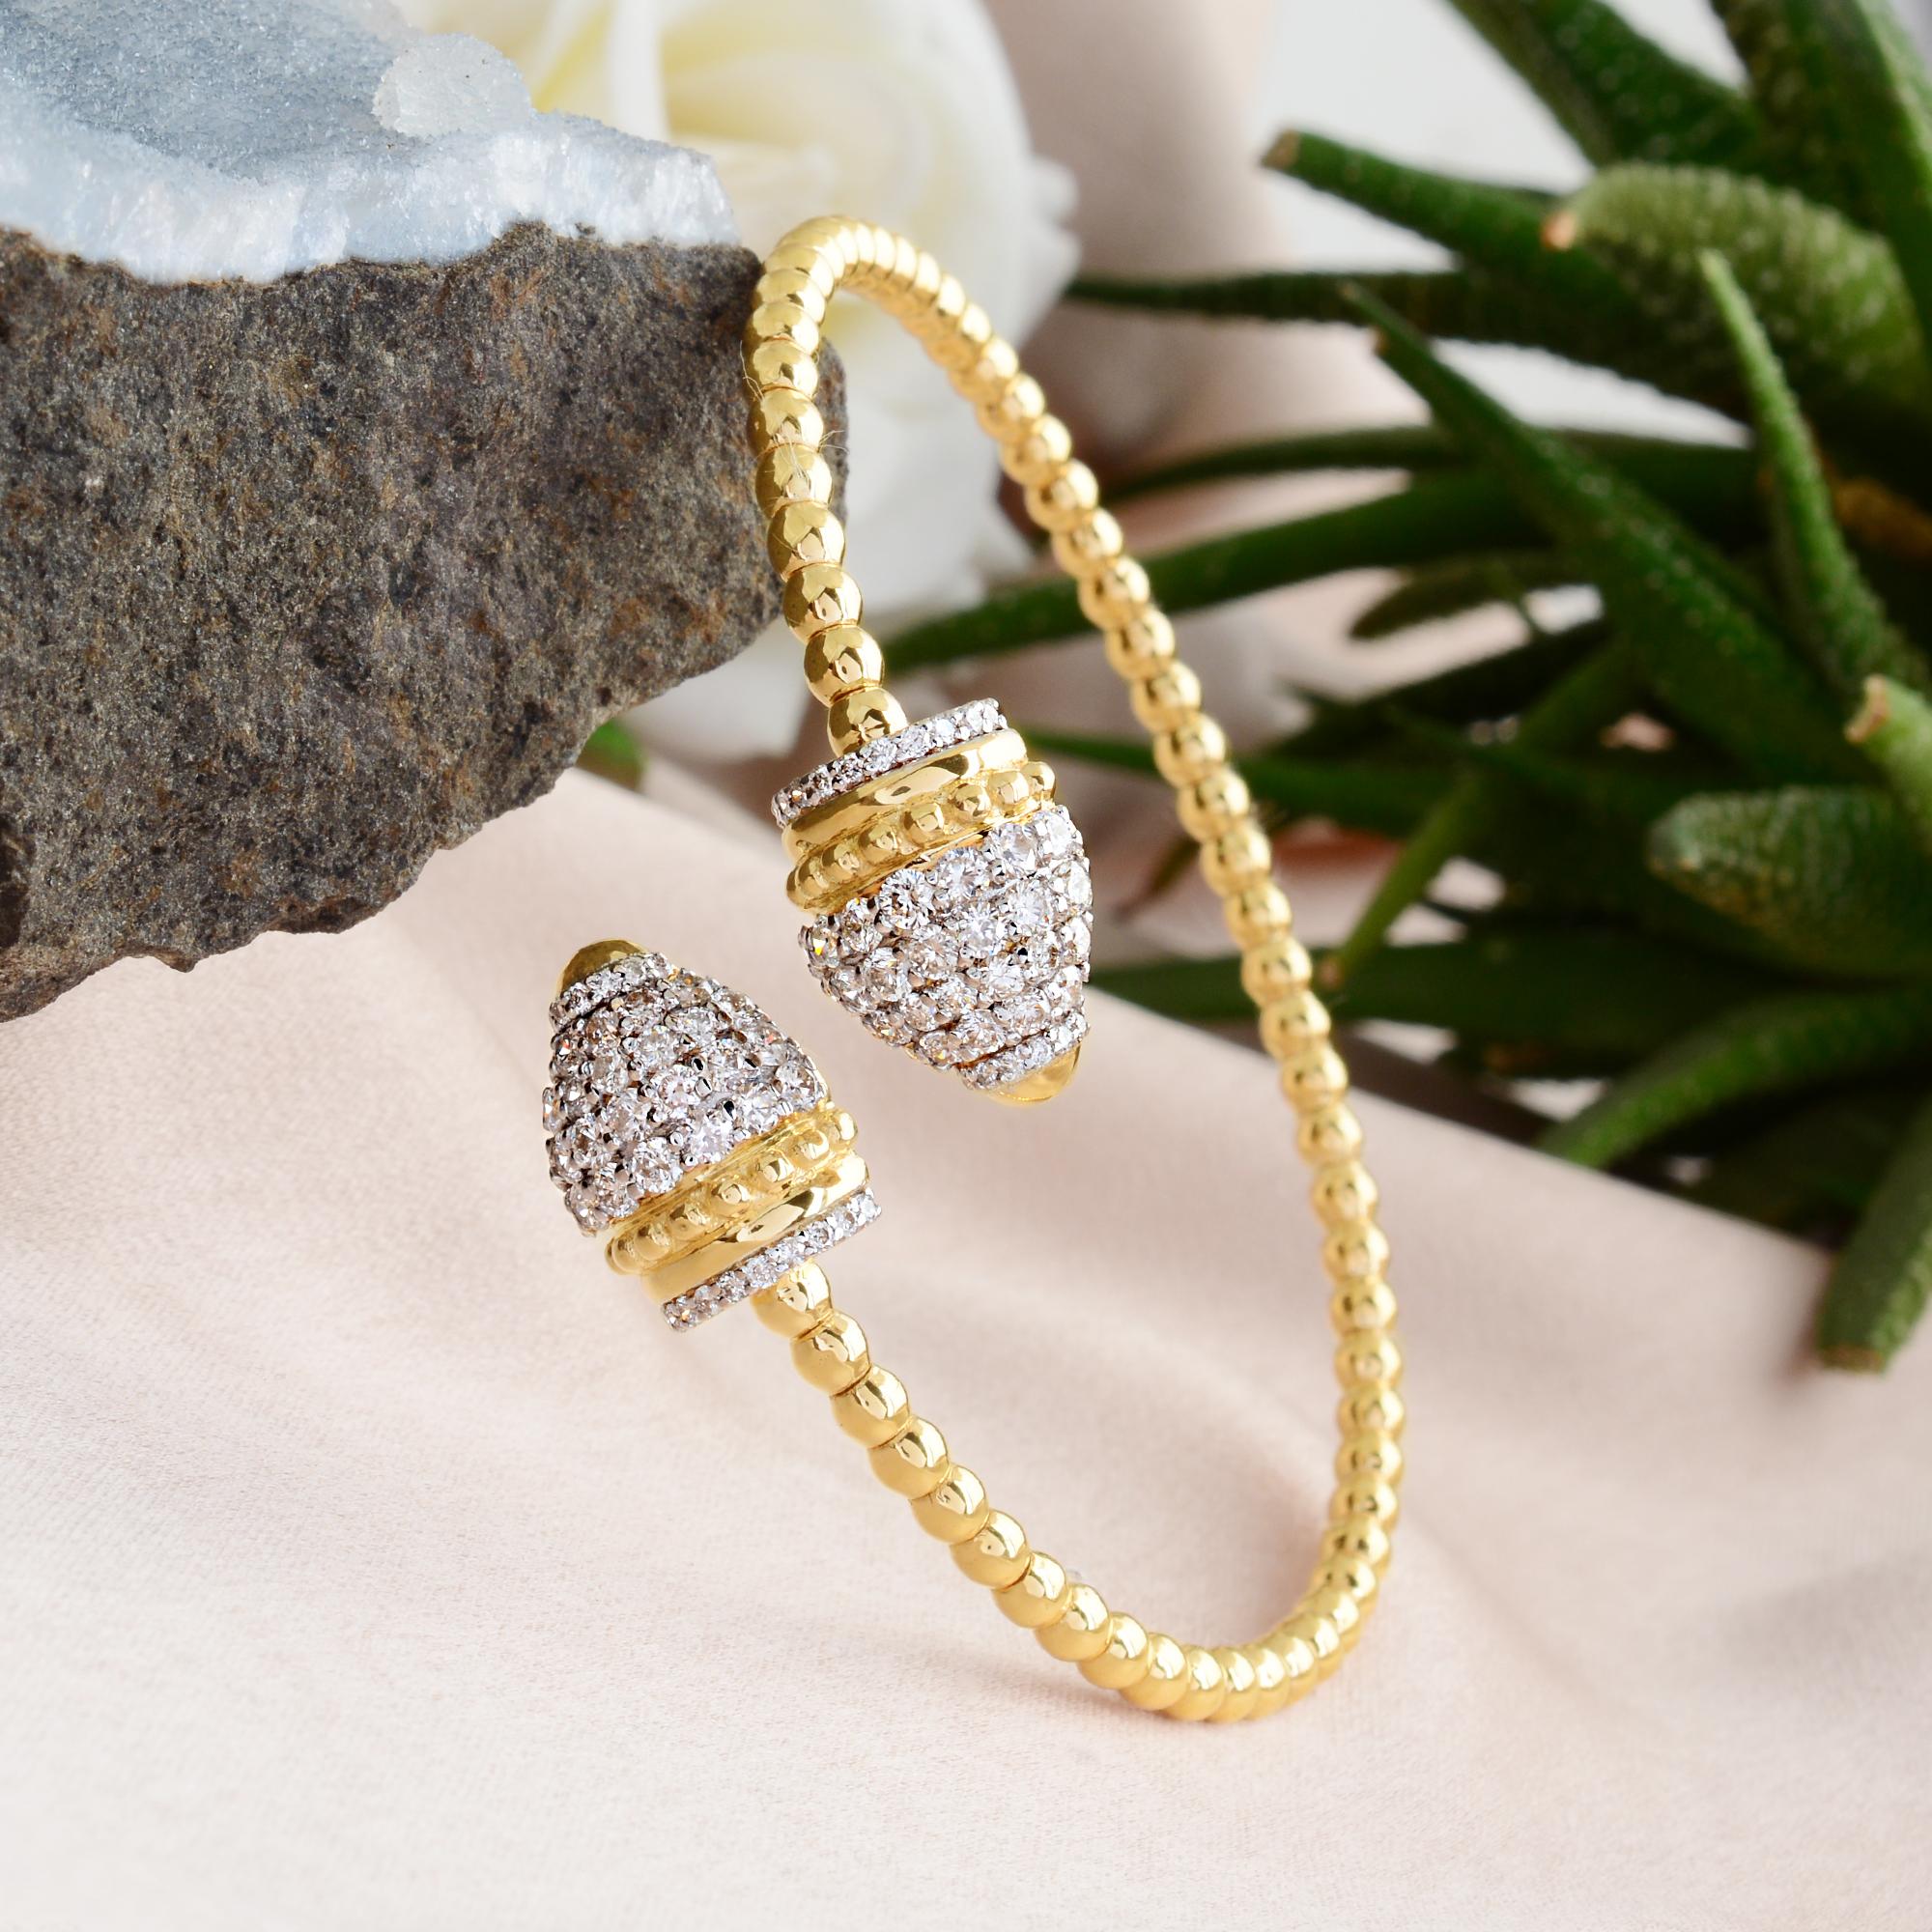 Round Cut 1.90 Carat Pave Diamond Wrap Bangle Bracelet Solid 18k Yellow Gold Fine Jewelry For Sale